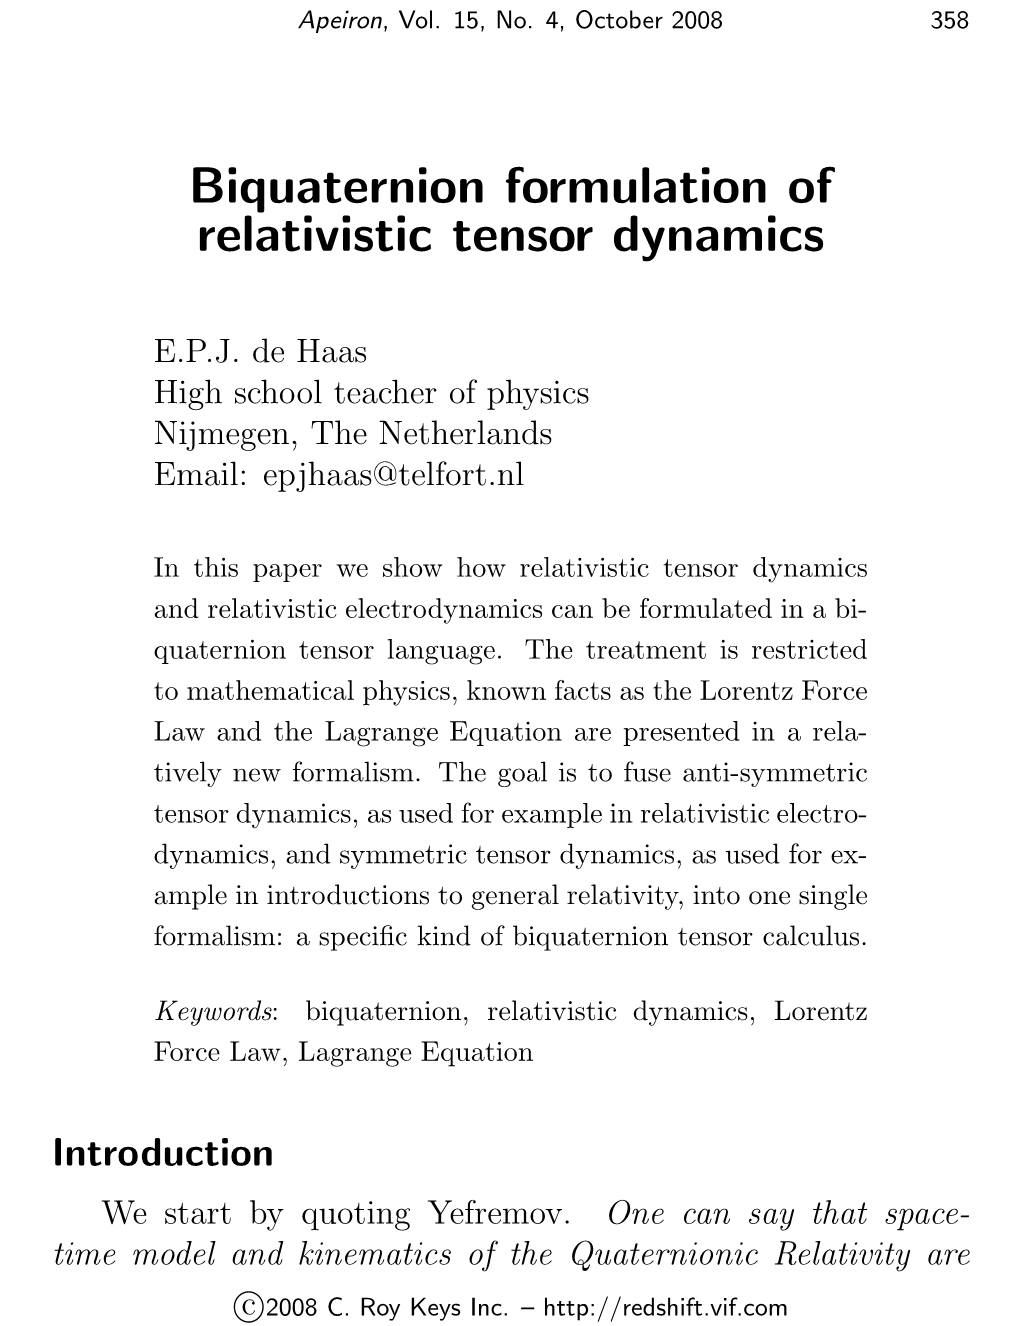 Biquaternion Formulation of Relativistic Tensor Dynamics